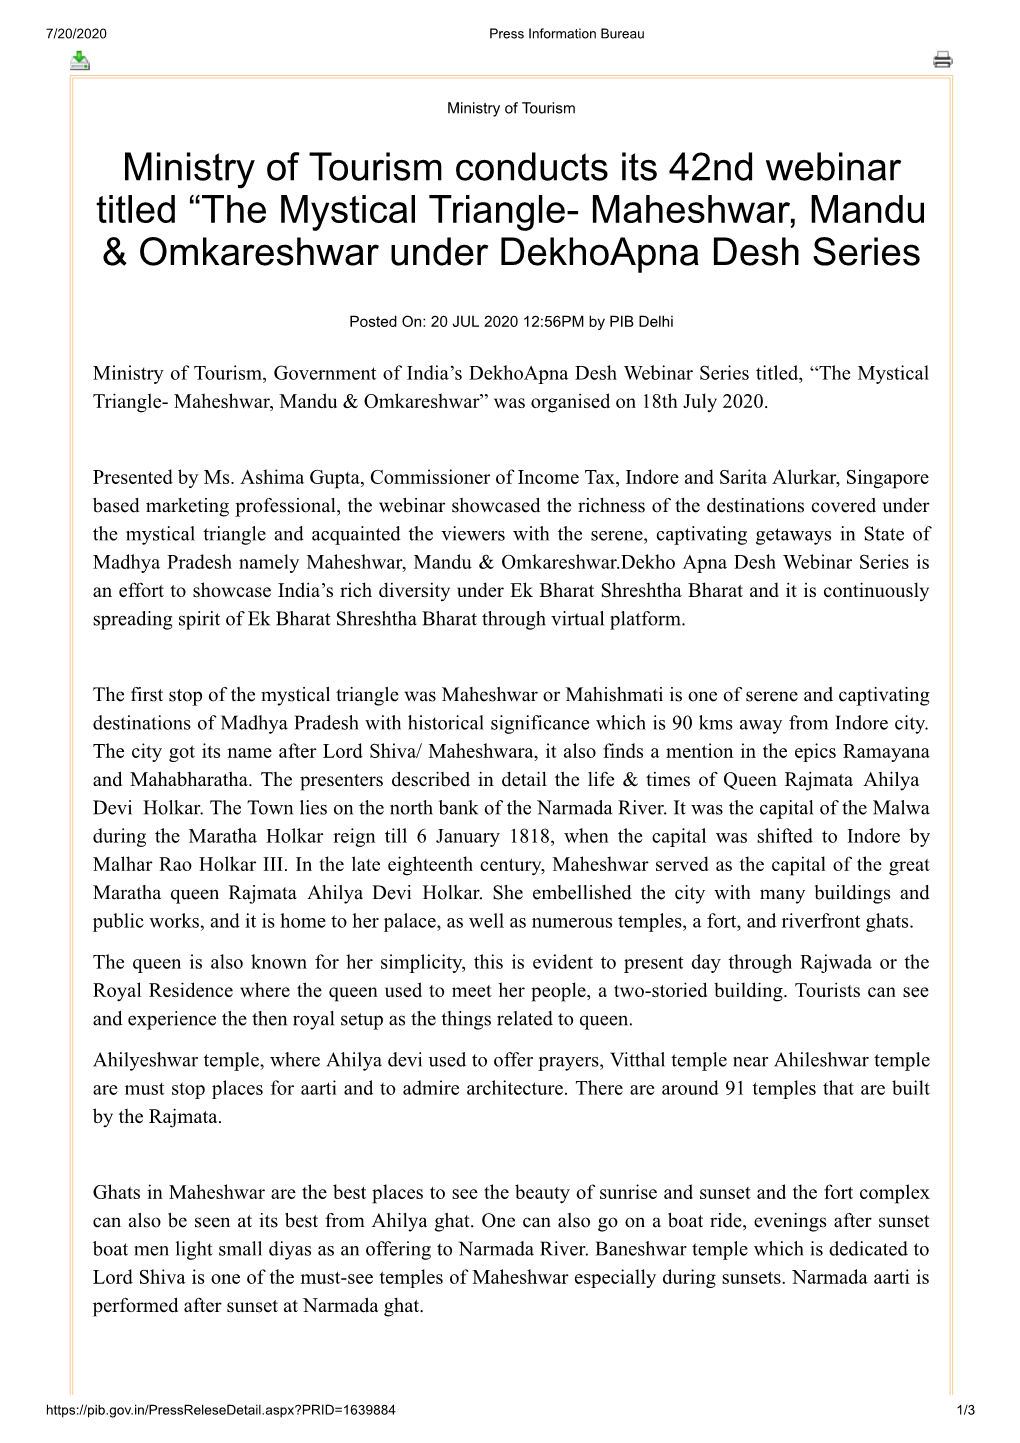 The Mystical Triangle- Maheshwar, Mandu & Omkareshwar Under